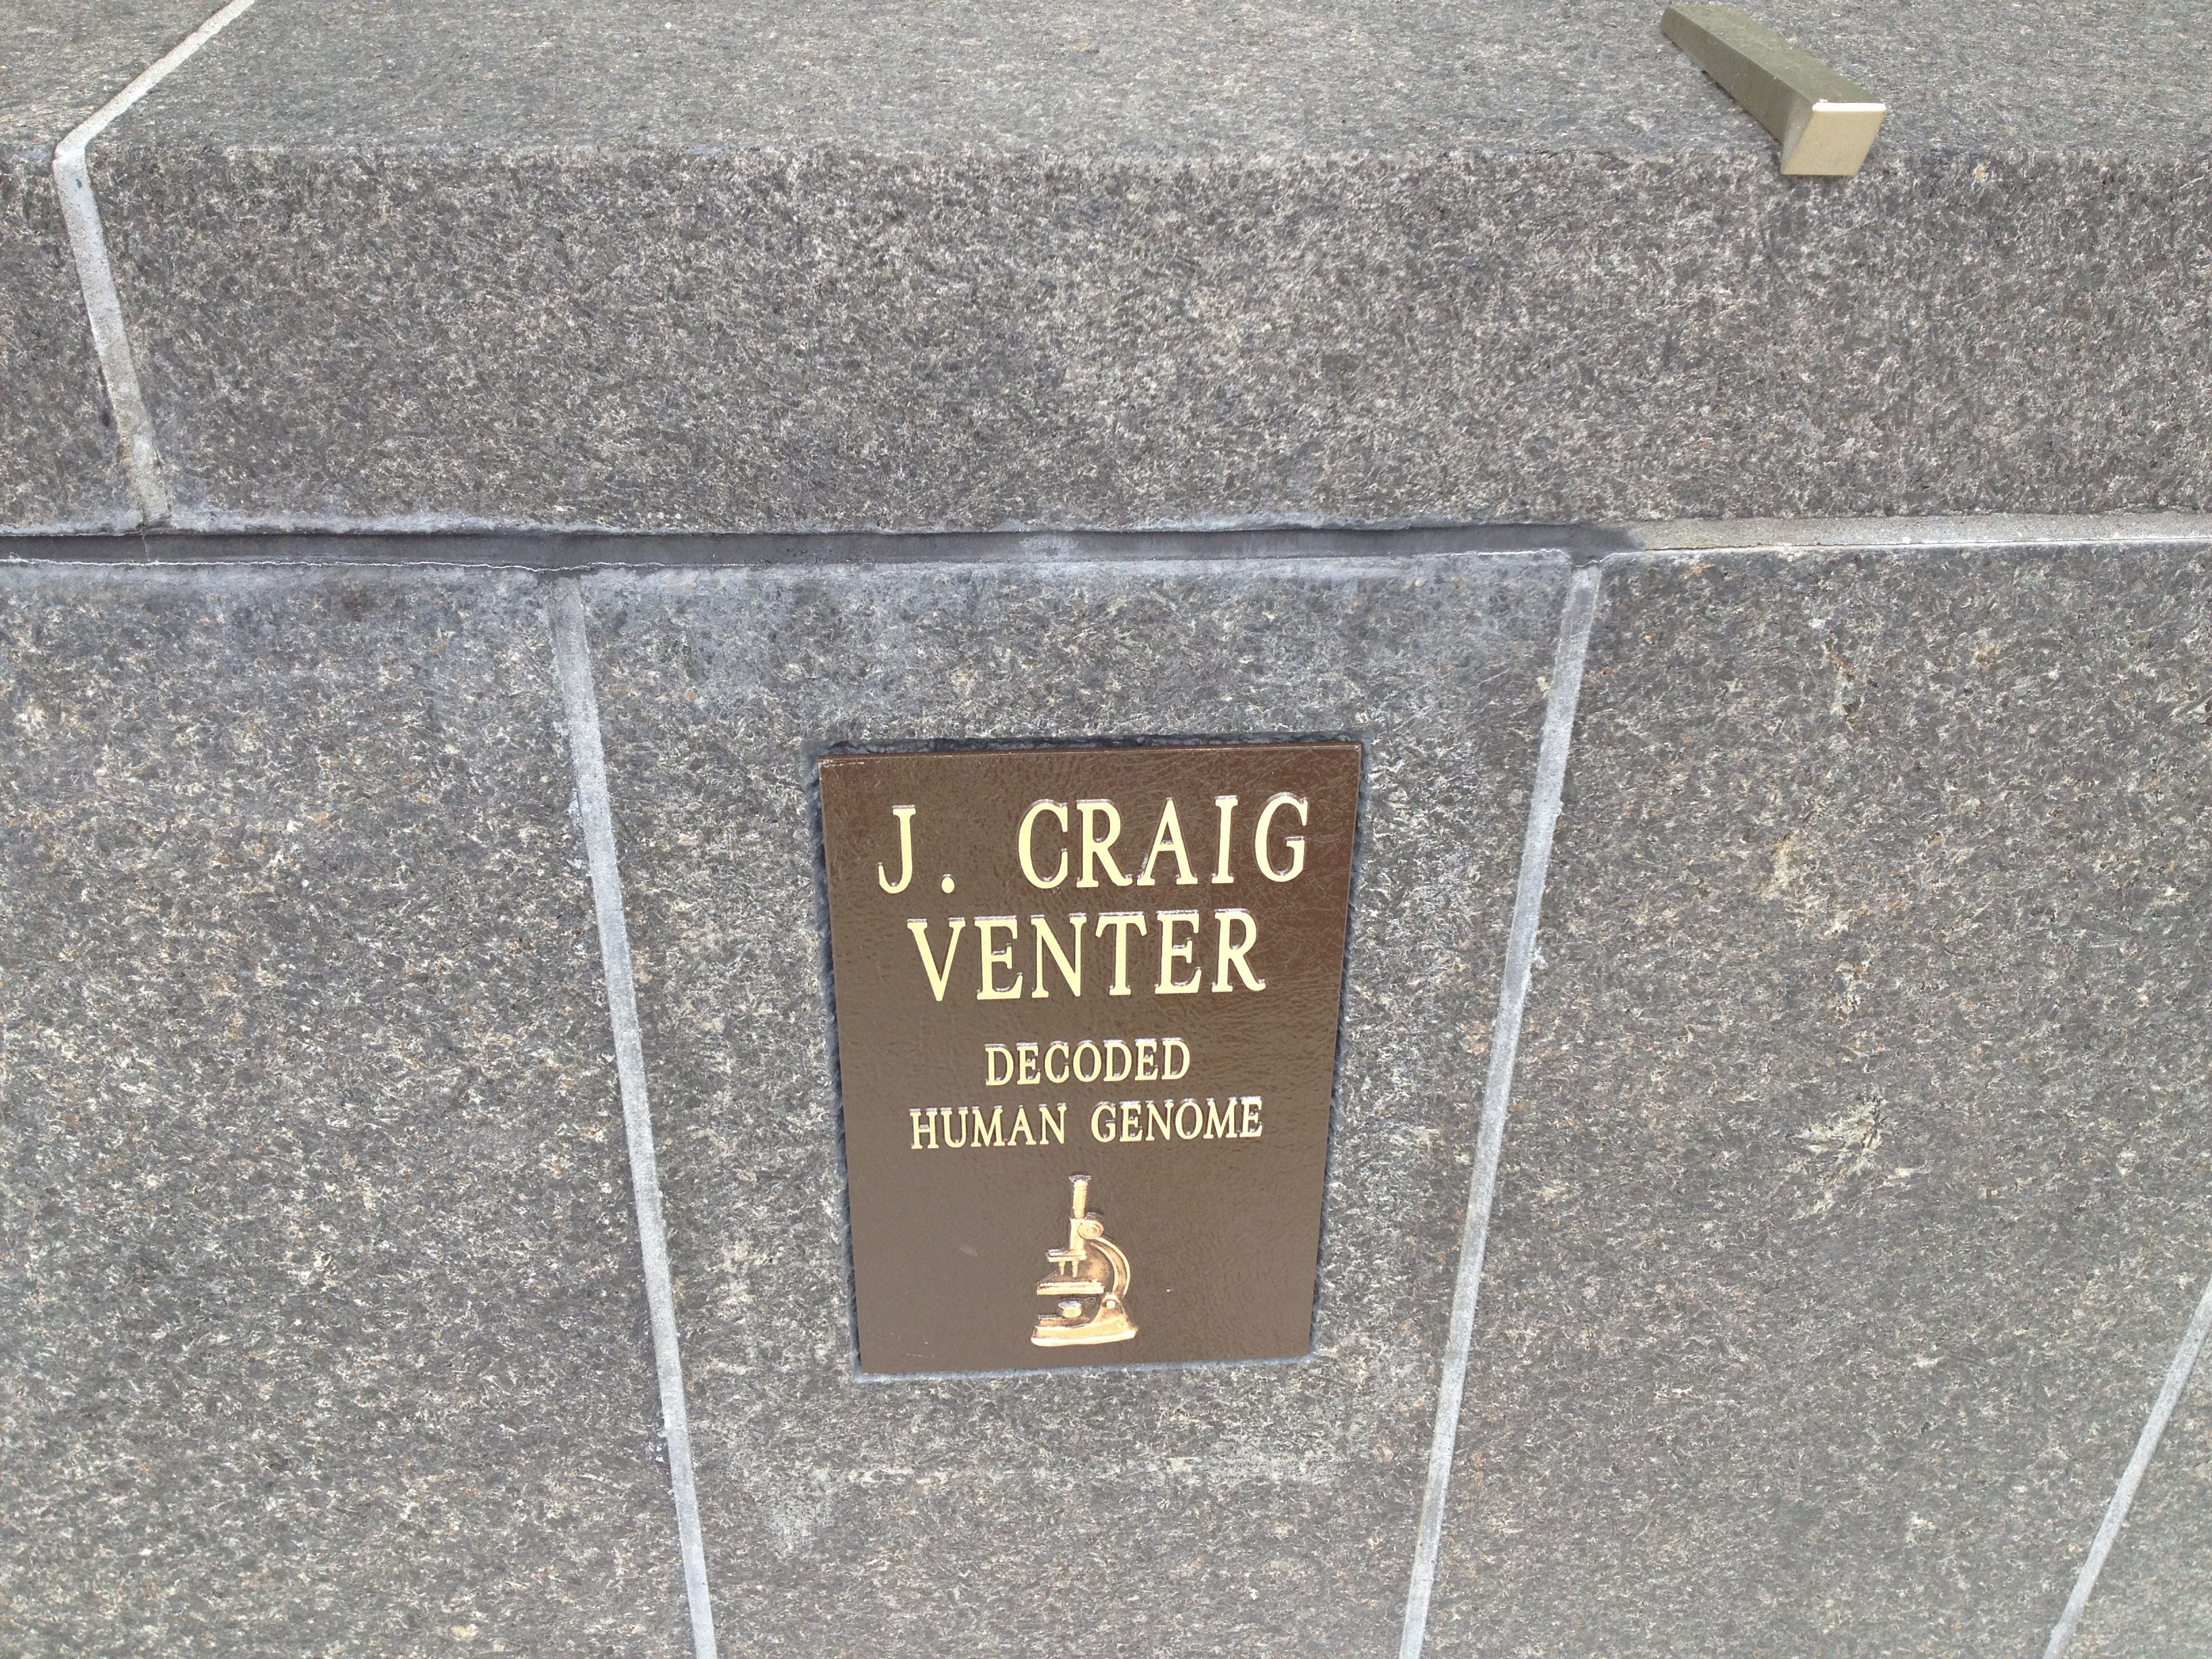 Dr. J. Craig Venter's plaque on the Biowalk of Fame